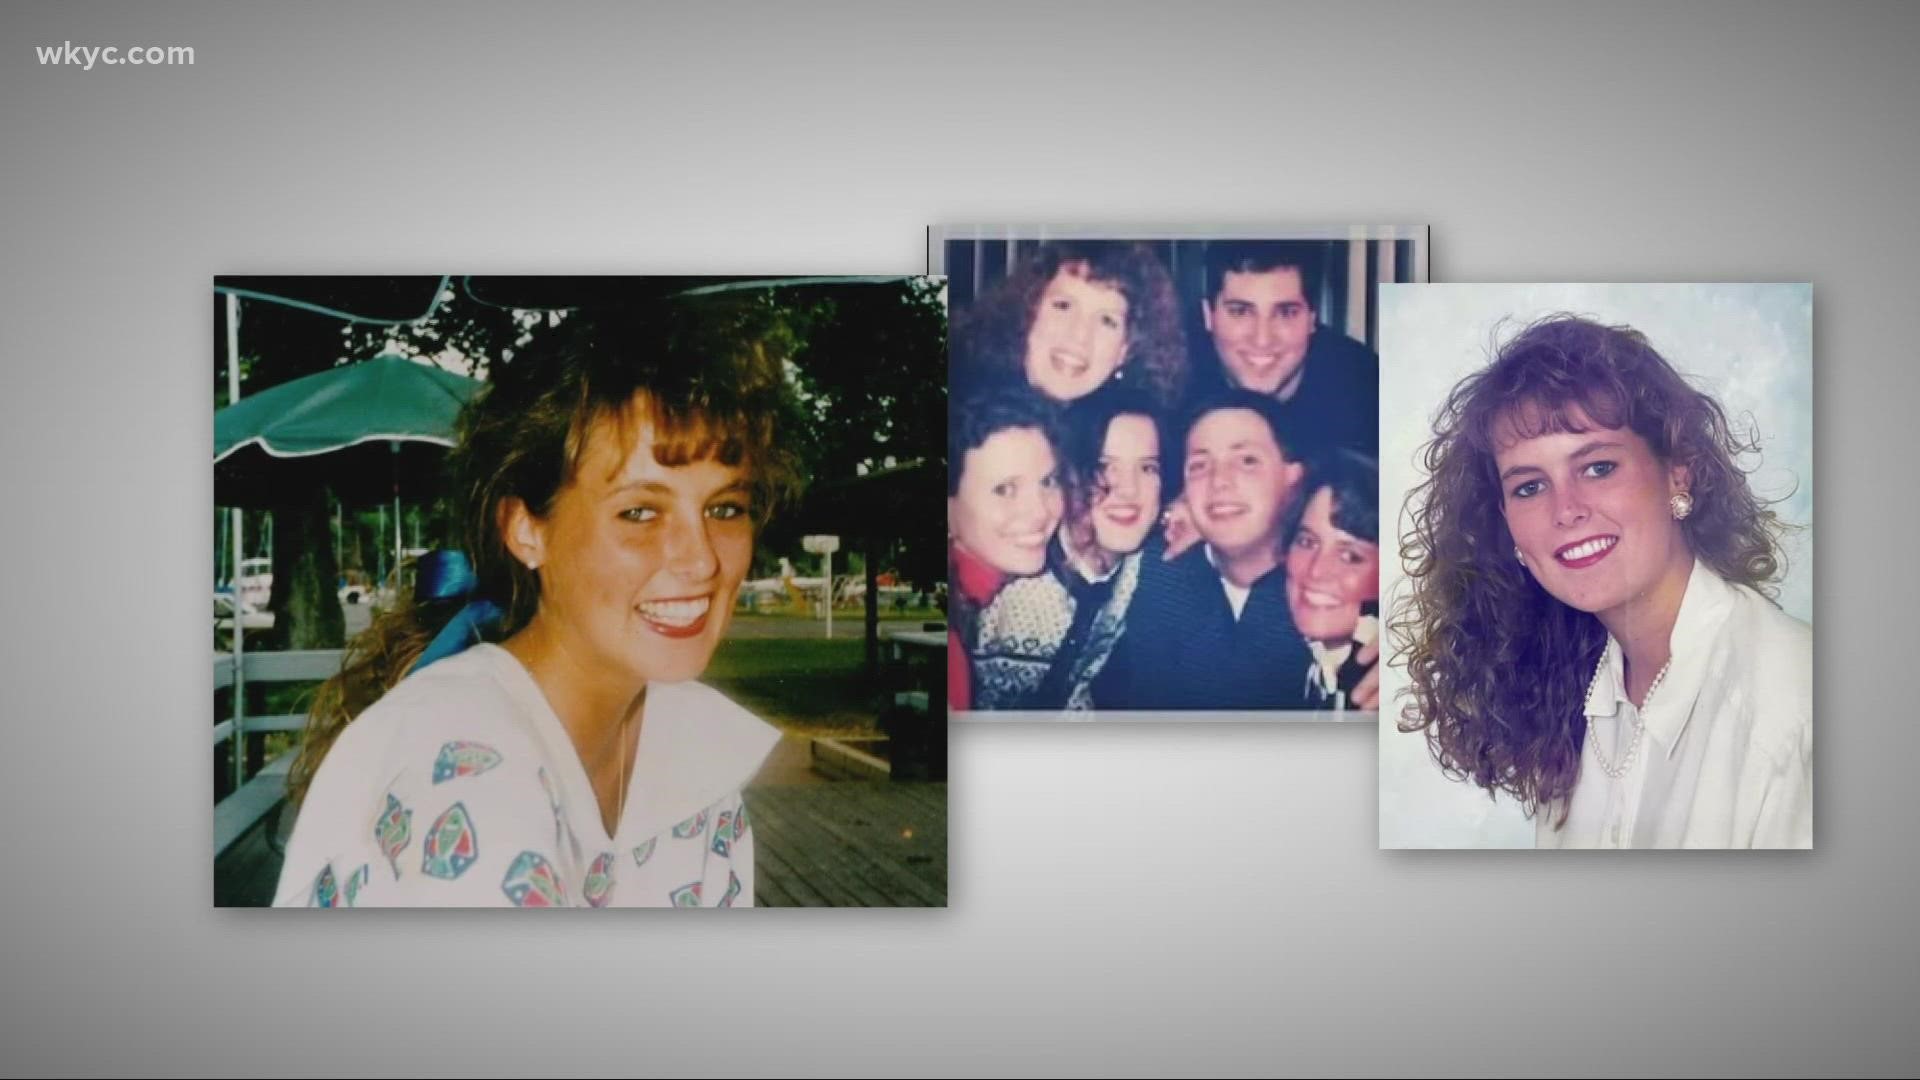 University of Toledo medical student Melissa Herstrum was killed 30 years ago. Lindsay Buckingham spoke with her loved ones, desperate to keep her killer locked up.